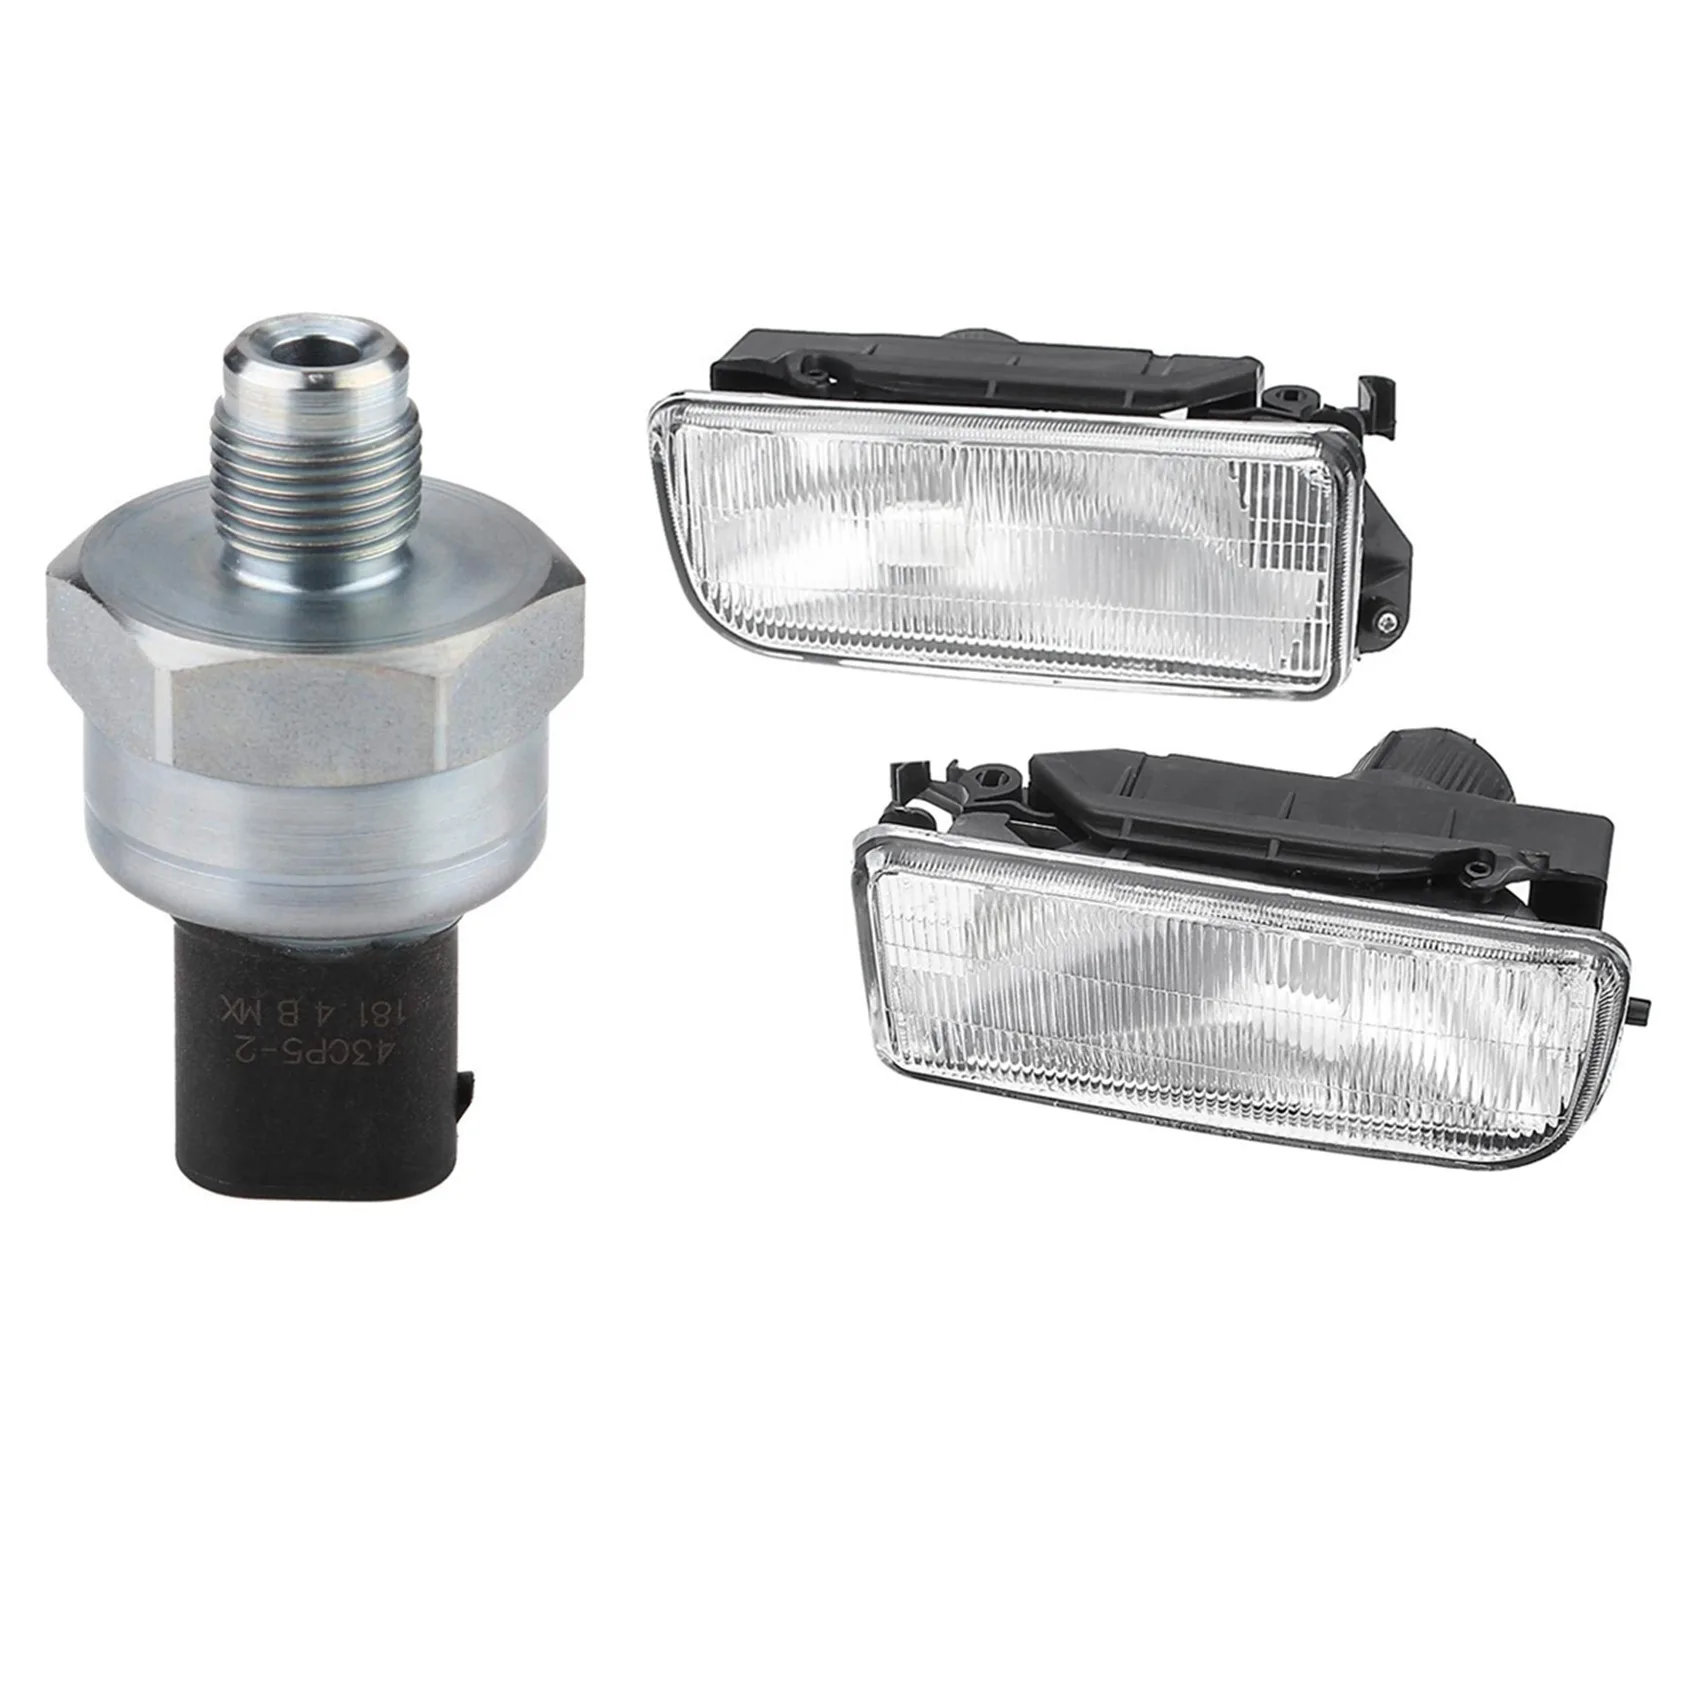 

Dsc датчик тормозного давления переключатель для Bmw E46 E60 E61 E63 E64 E90 Z3 Z4 и передний бампер противотуманная фара Лампа H1 без лампы